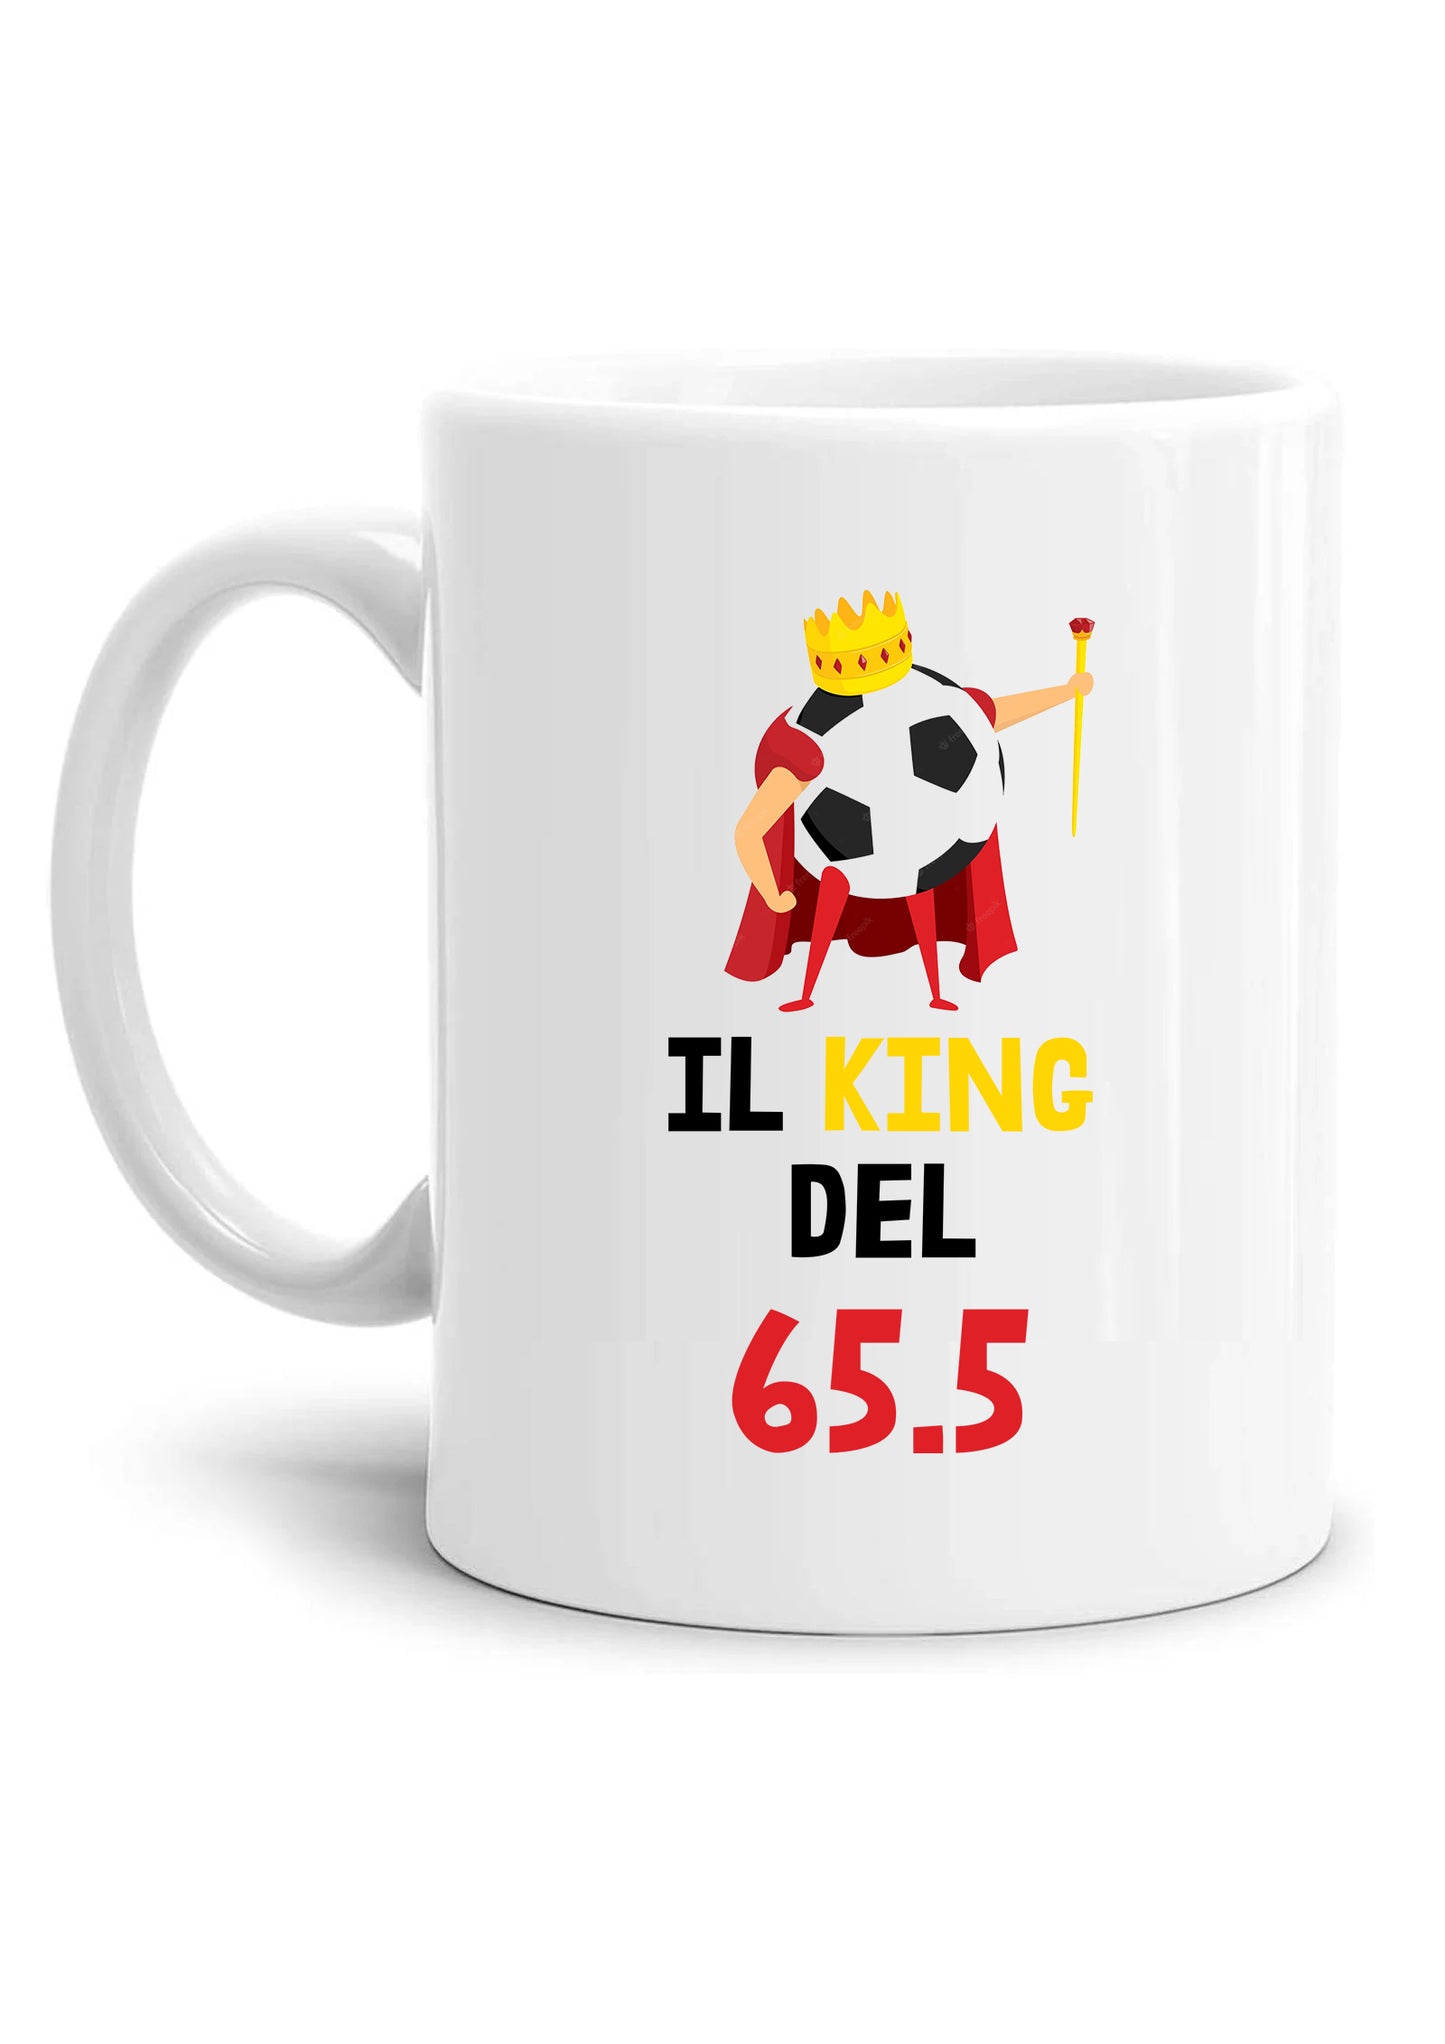 Mug mug - the king of 65 5 fun gift idea